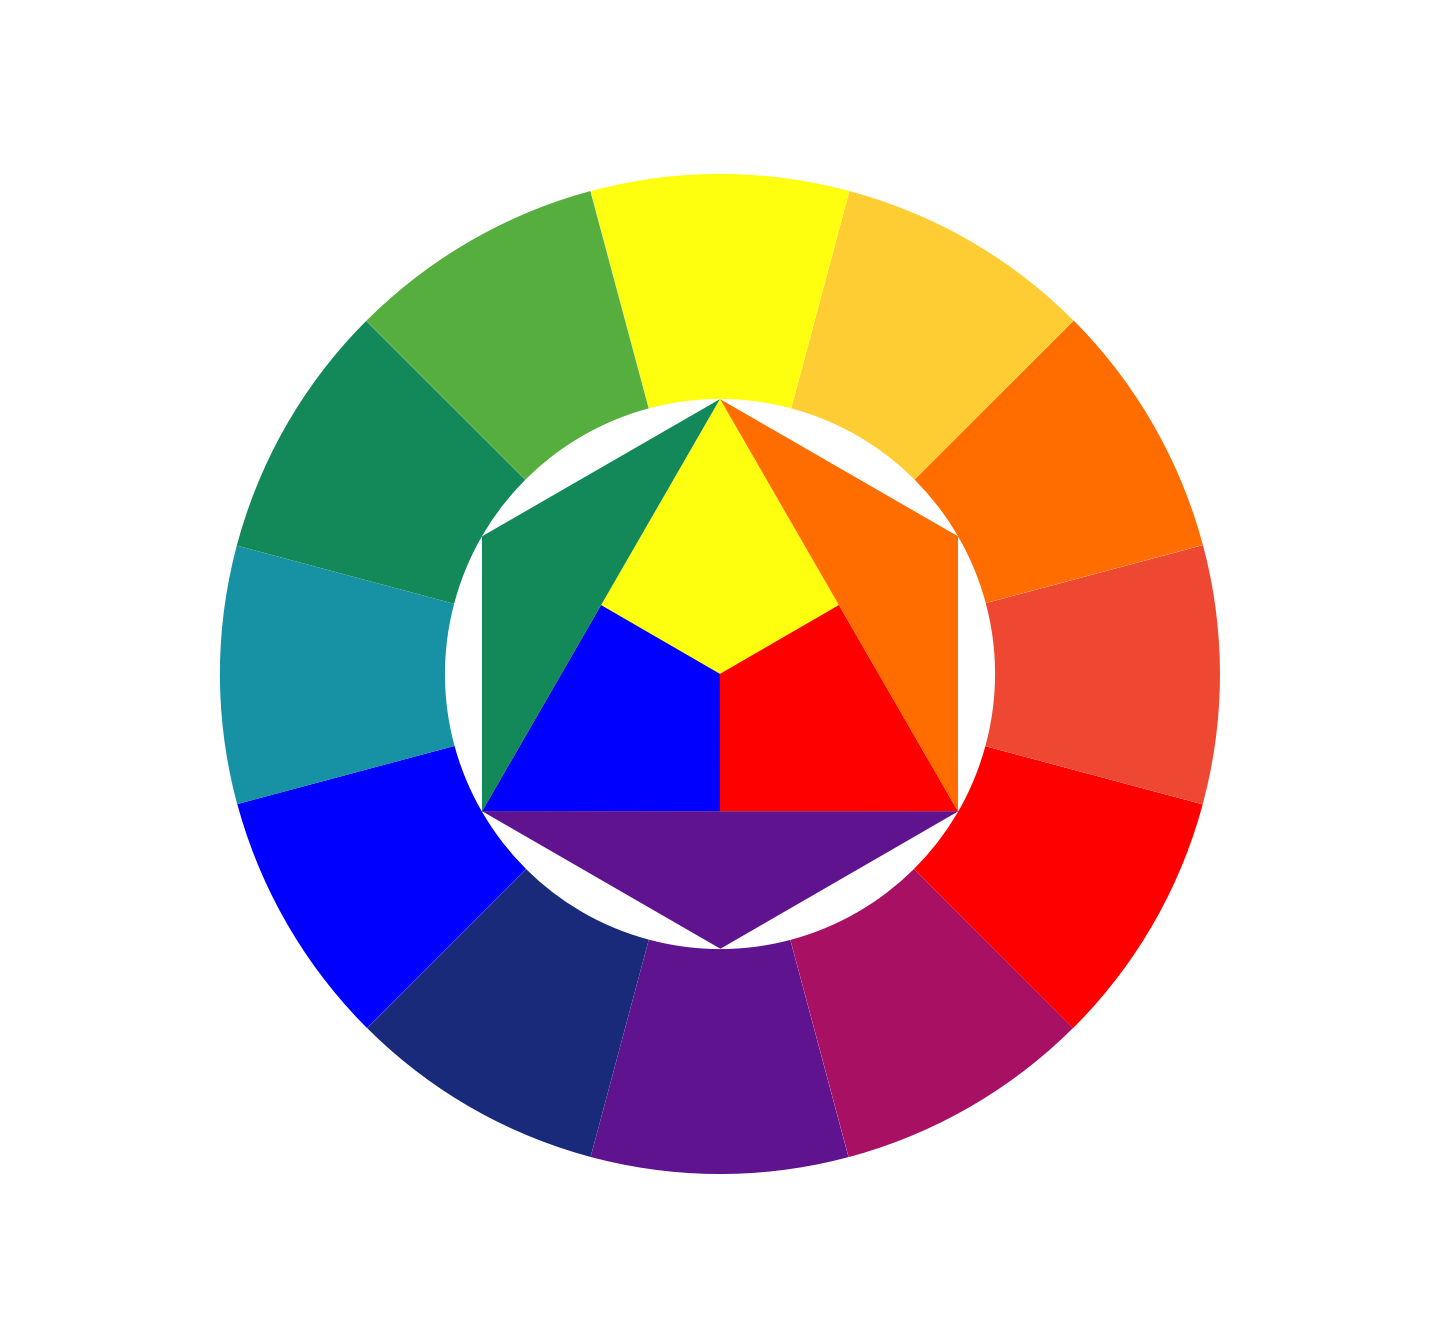 Цвет round. Круг Иоханнеса Иттена. Цветовой спектр Иттена. Иоганнес Иттен цветовой круг. Цветовой круг Иттена контрасты.